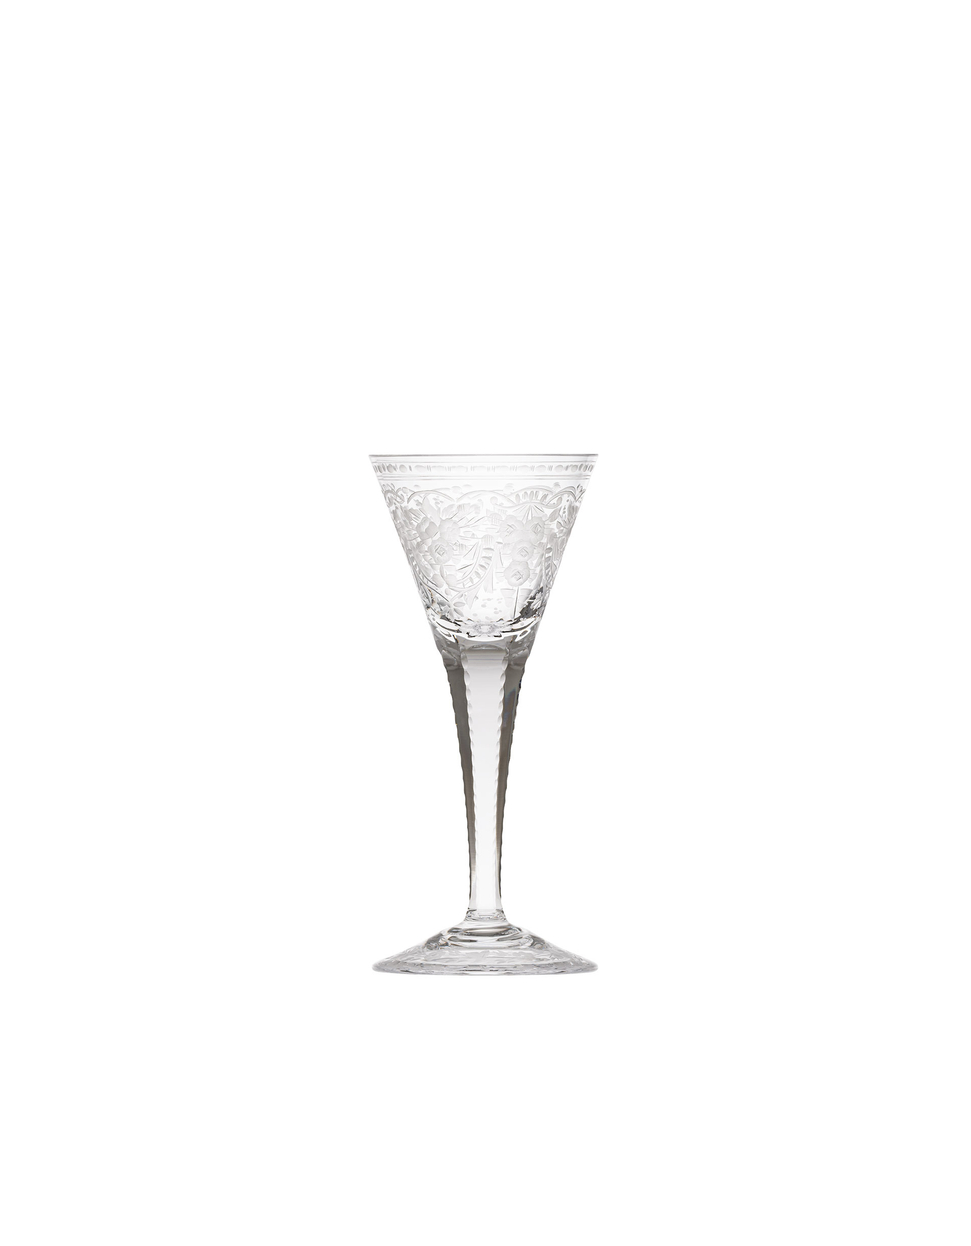 Maharani liqueur glass, 50 ml